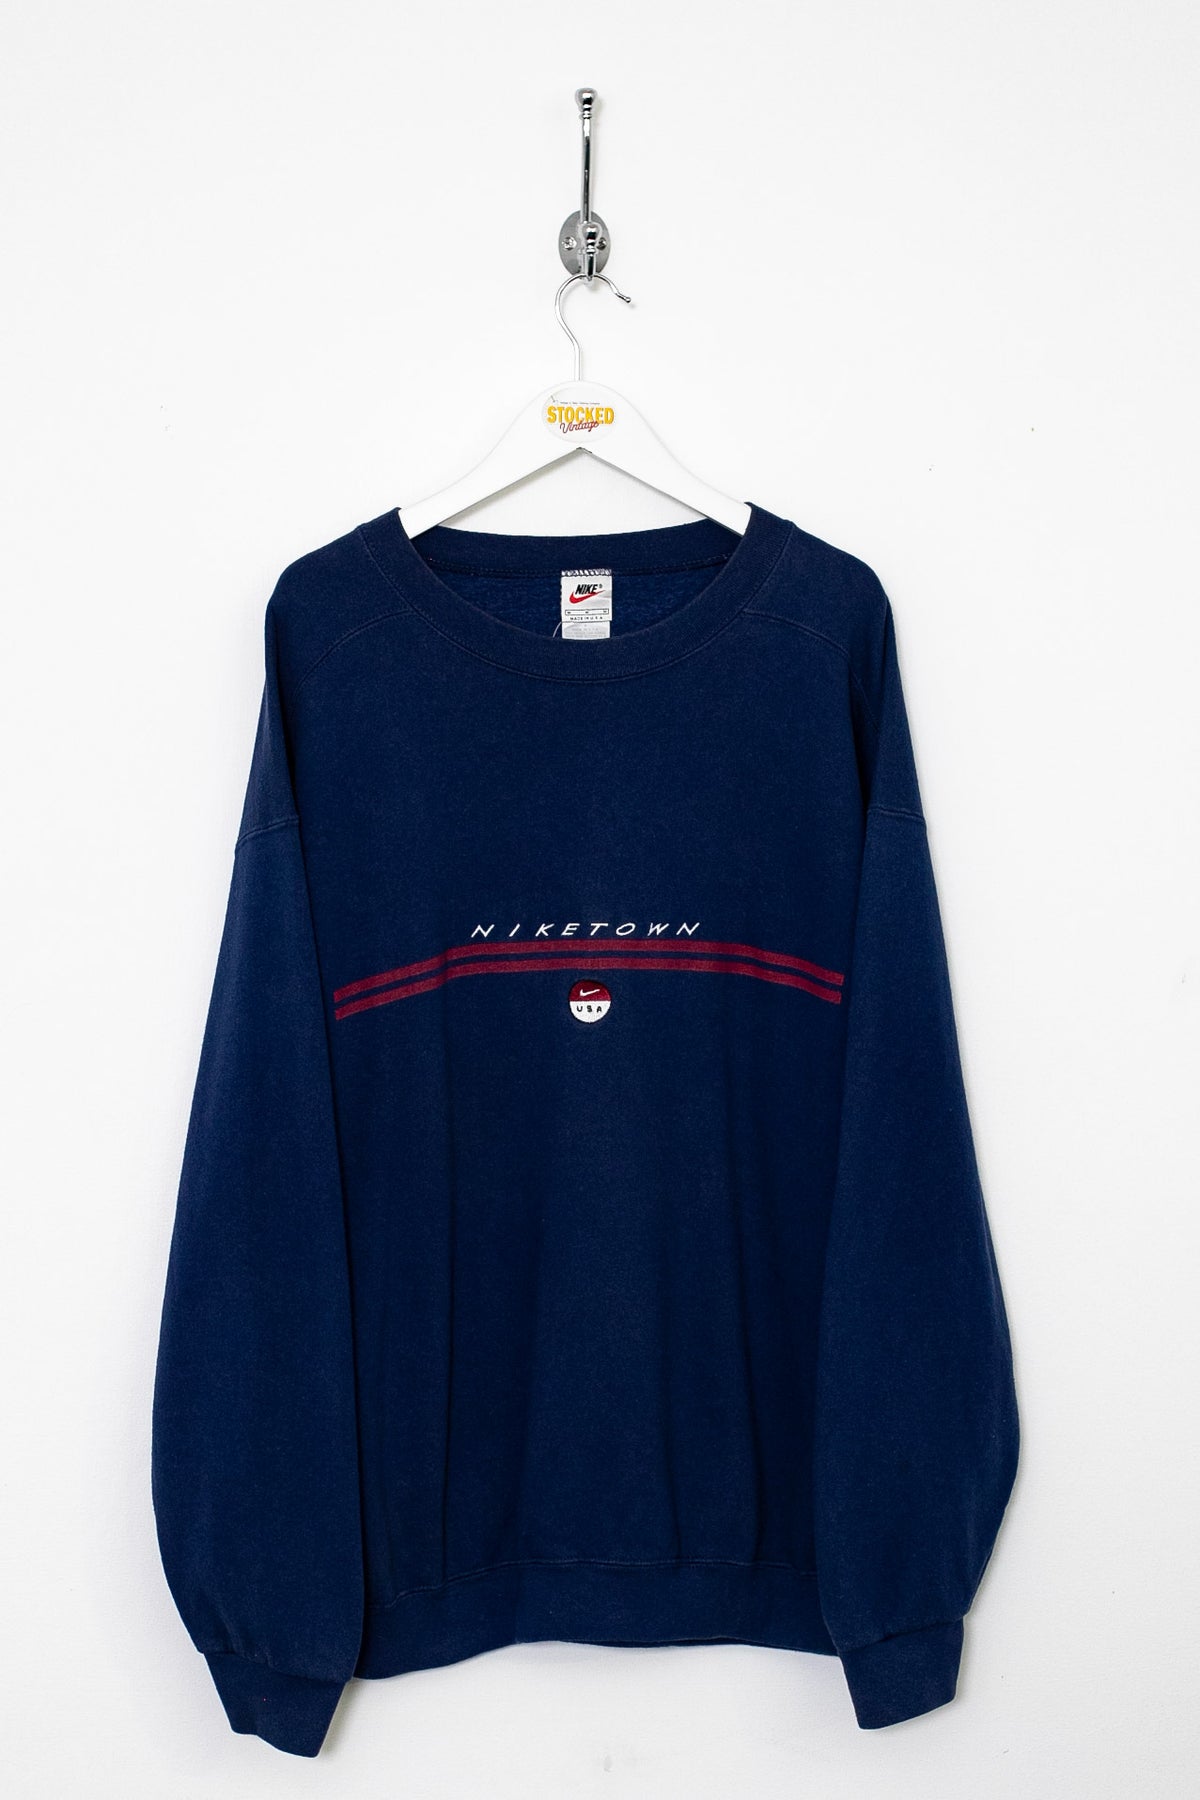 90s Nike Town Sweatshirt (M)